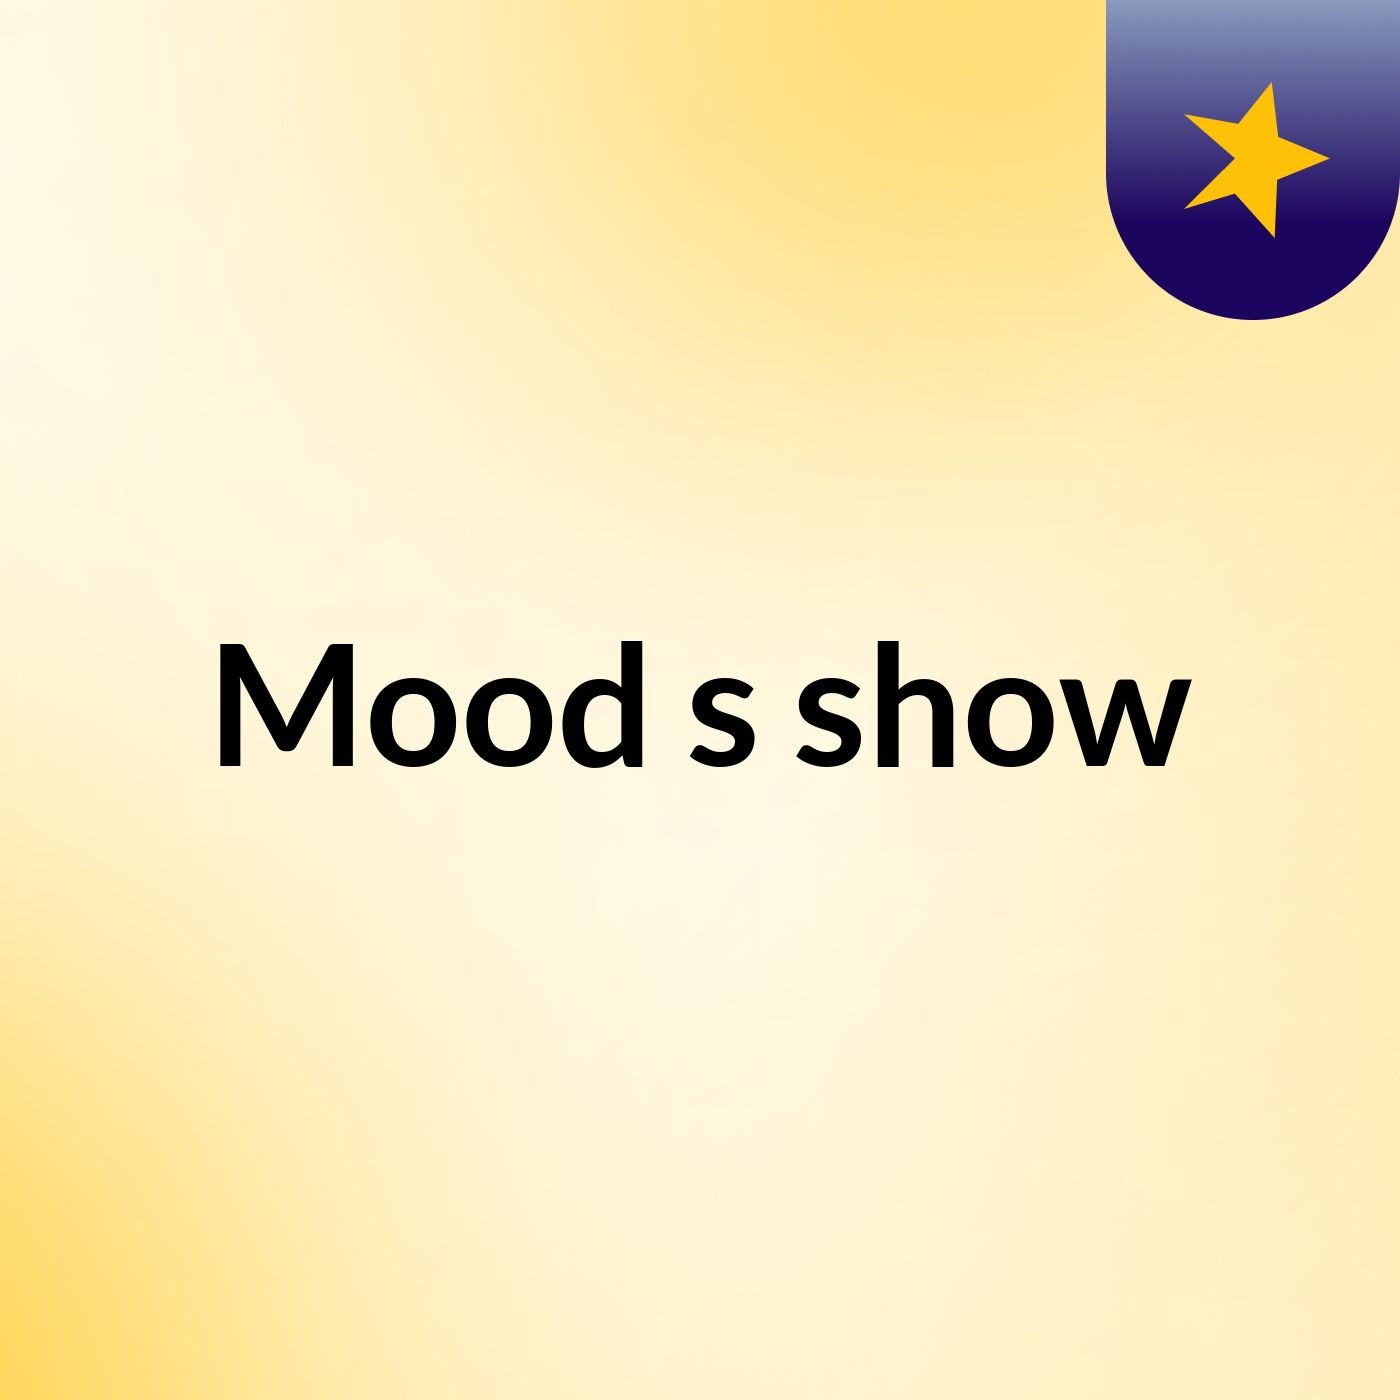 Mood's show